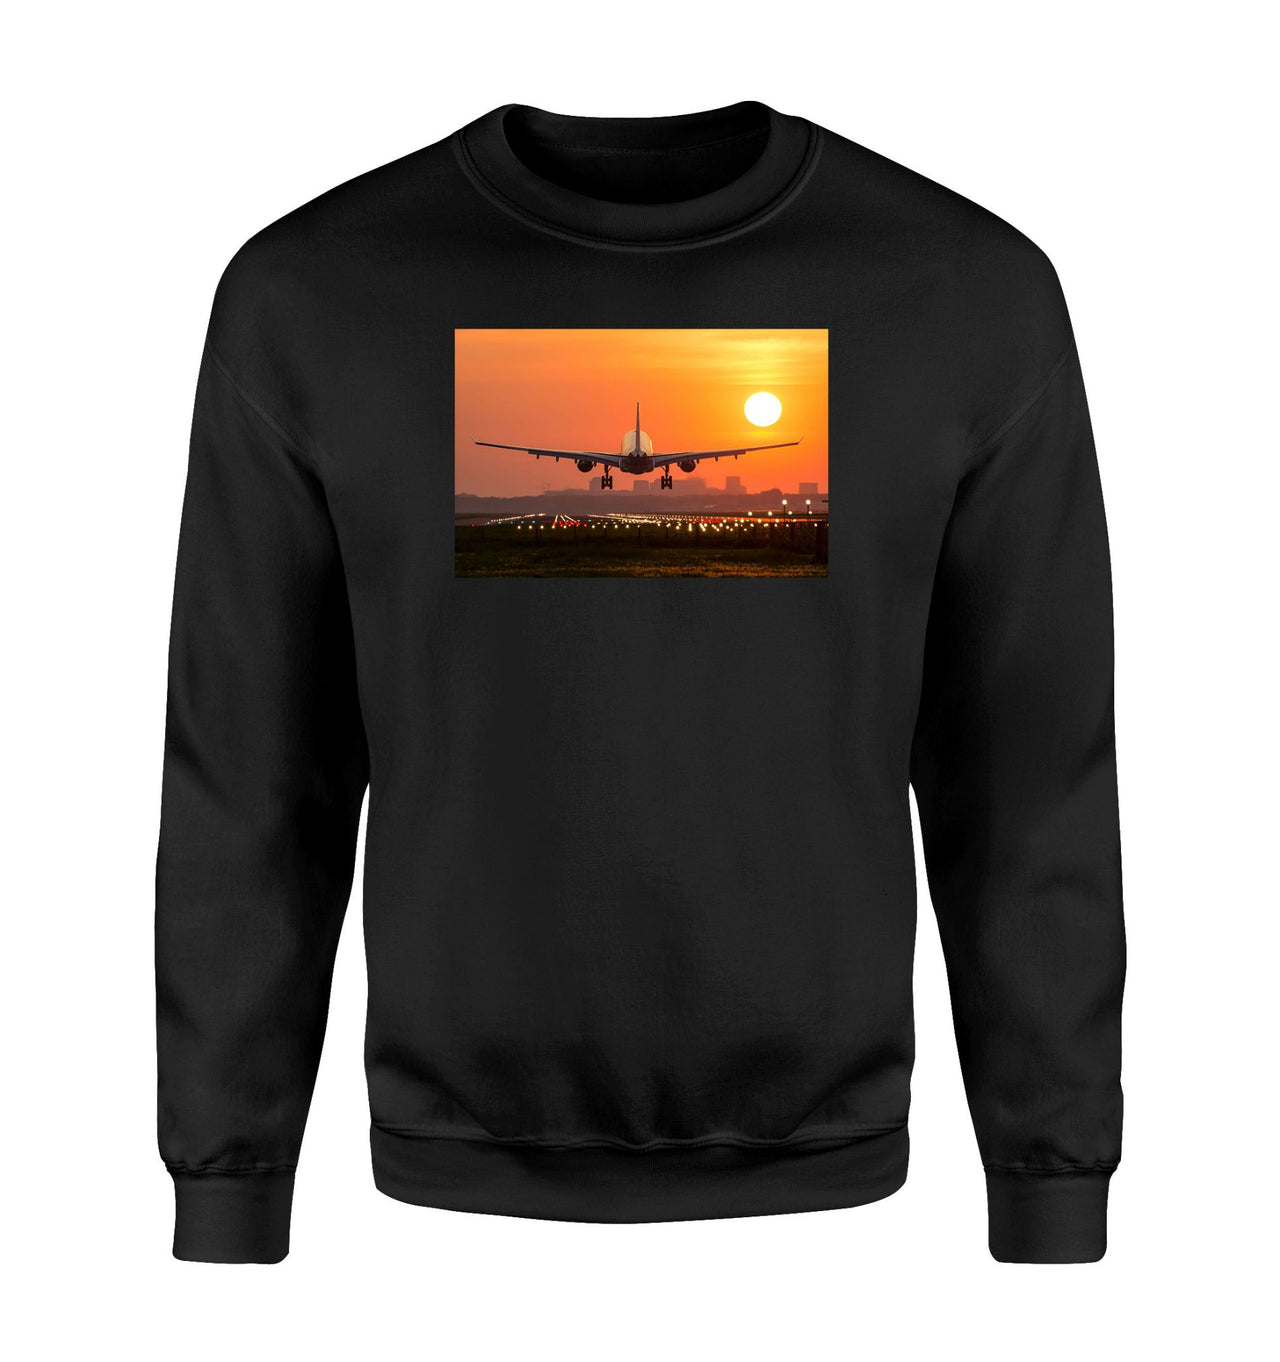 Amazing Airbus A330 Landing at Sunset Designed Sweatshirts